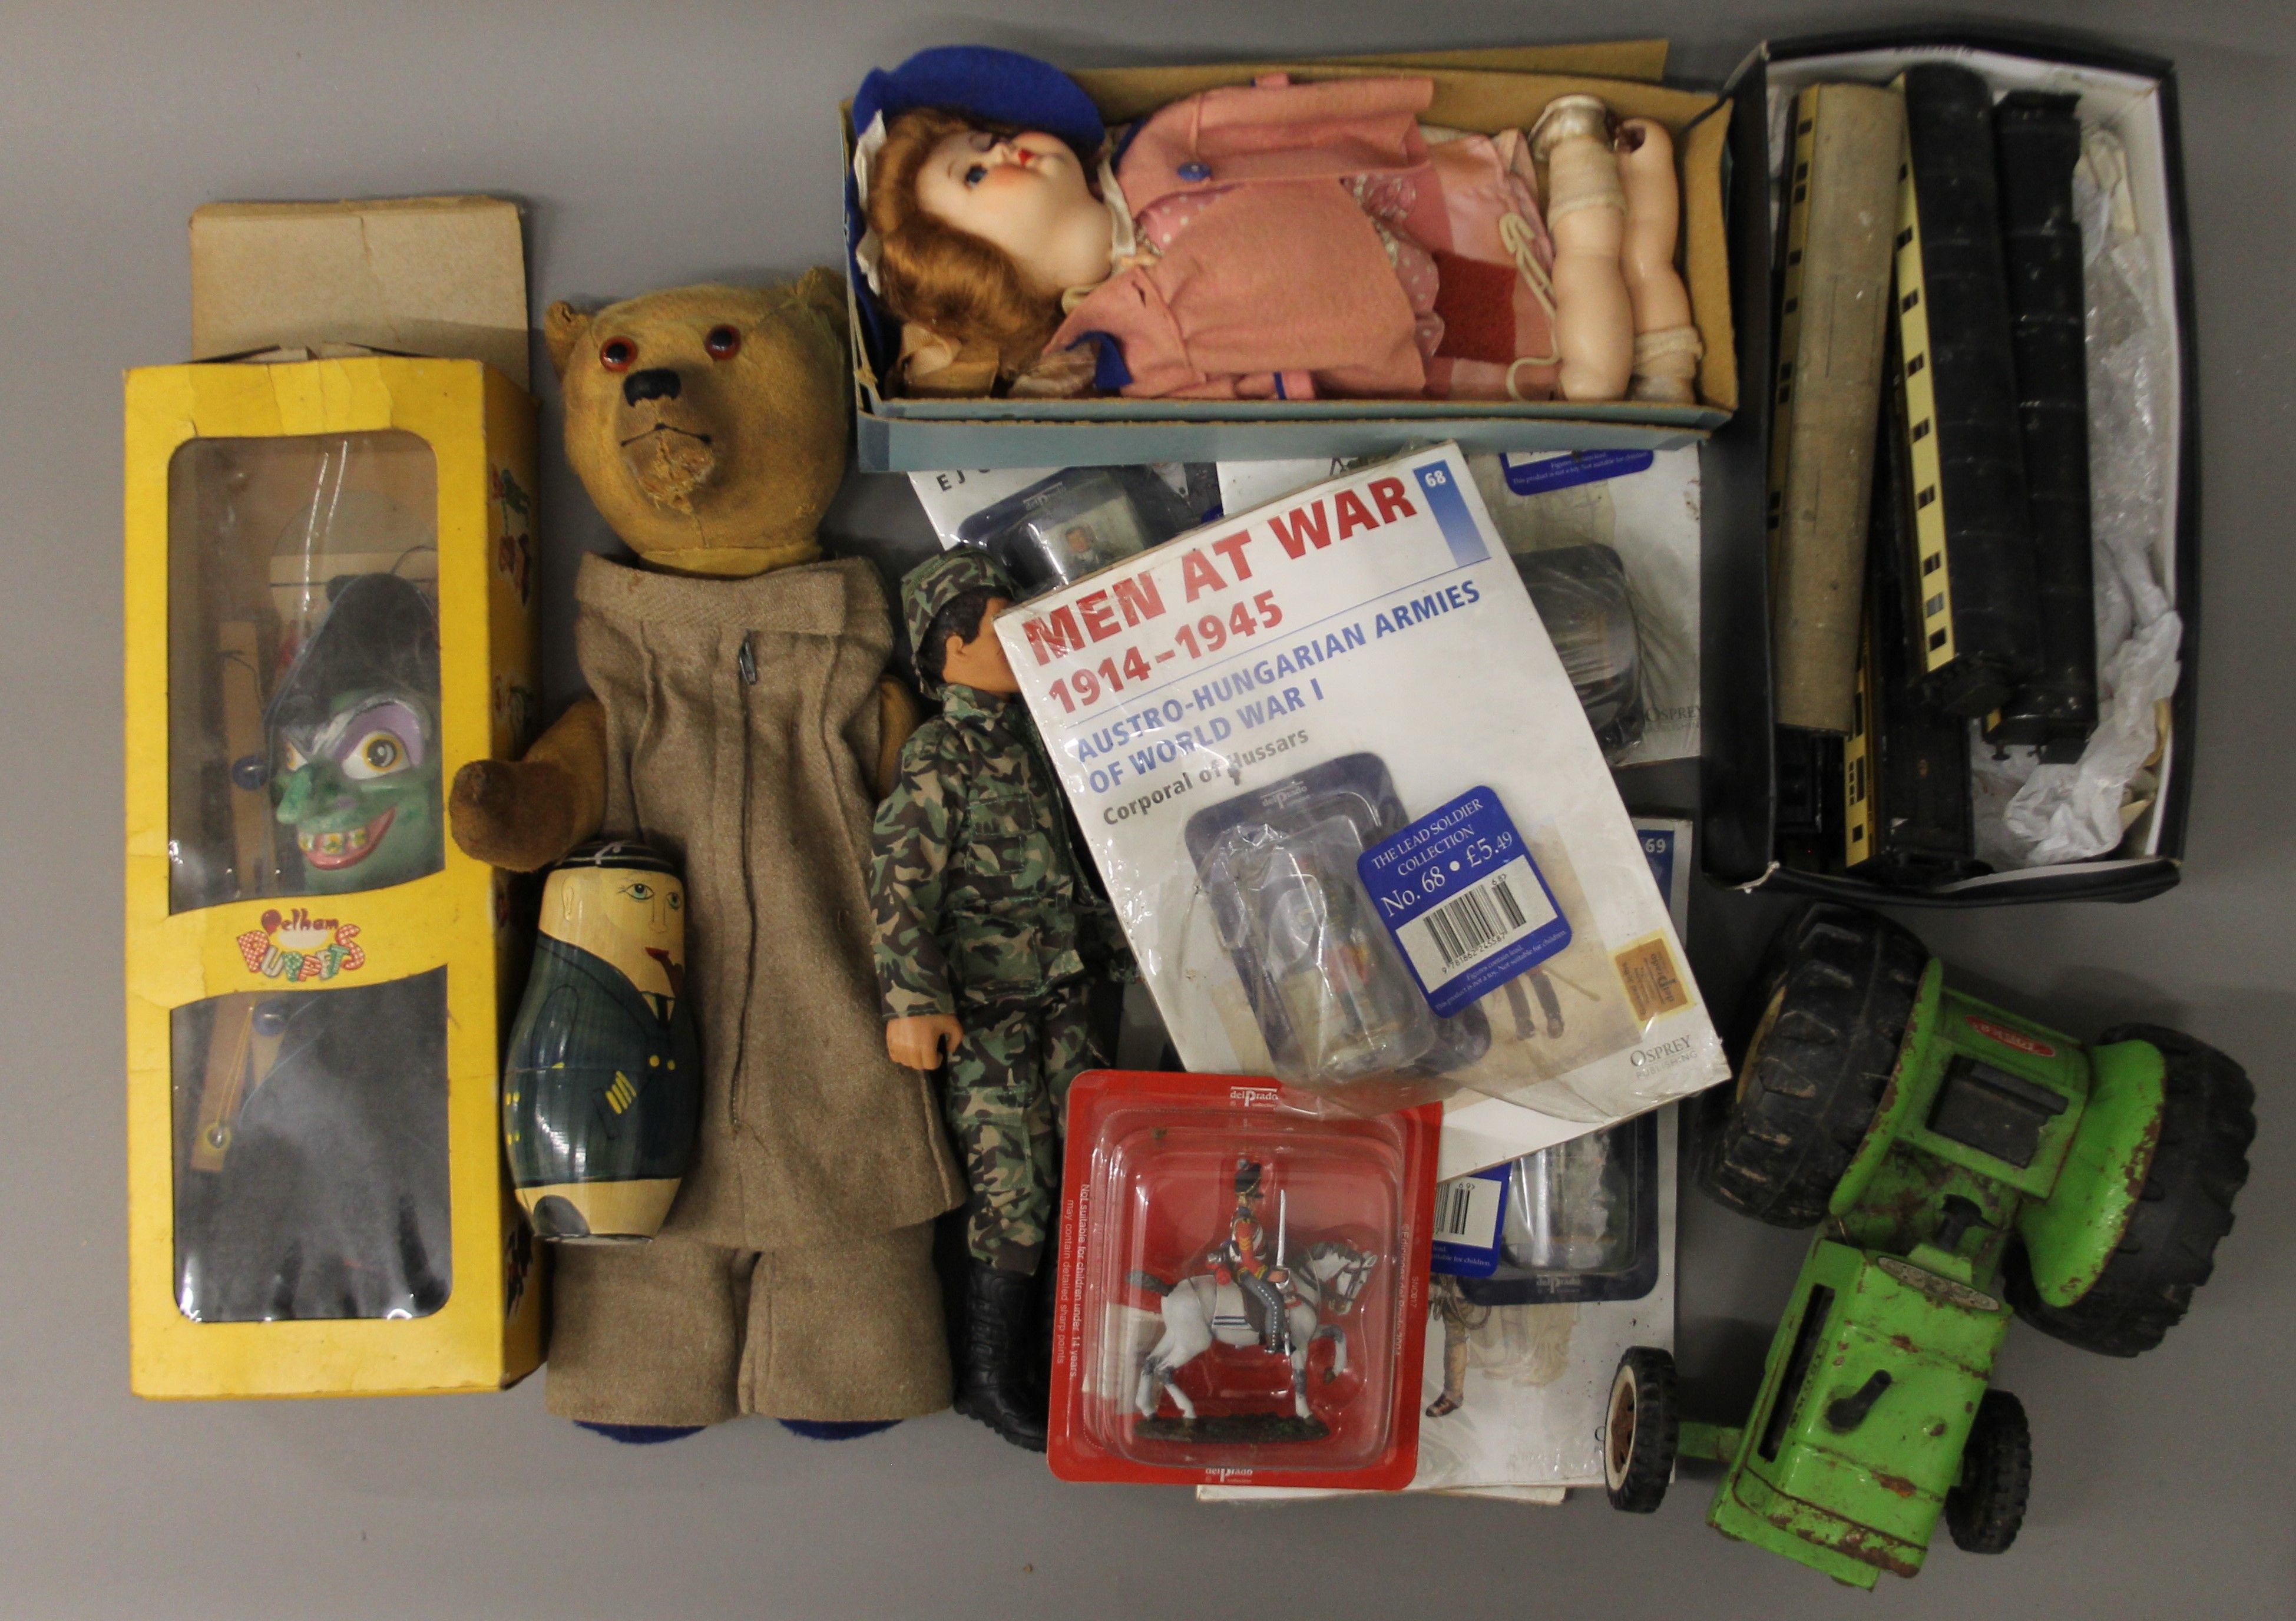 A quantity of various toys, including Pelham Puppets, Action Men, etc.